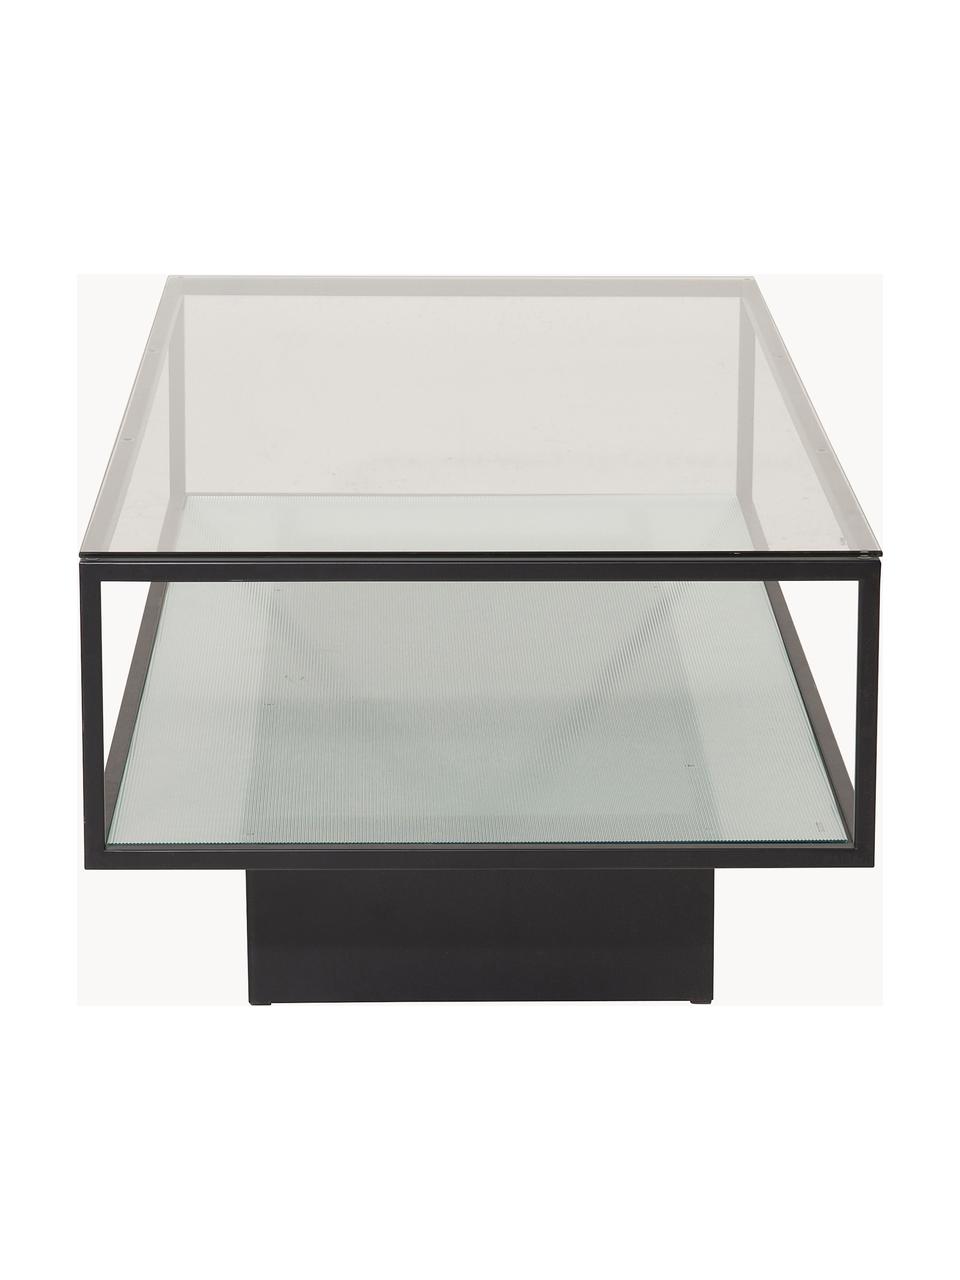 Metalen salontafel Maglehem met glazen tafelblad, Frame: gecoat metaal, Zwart, transparant, B 130 x H 60 cm